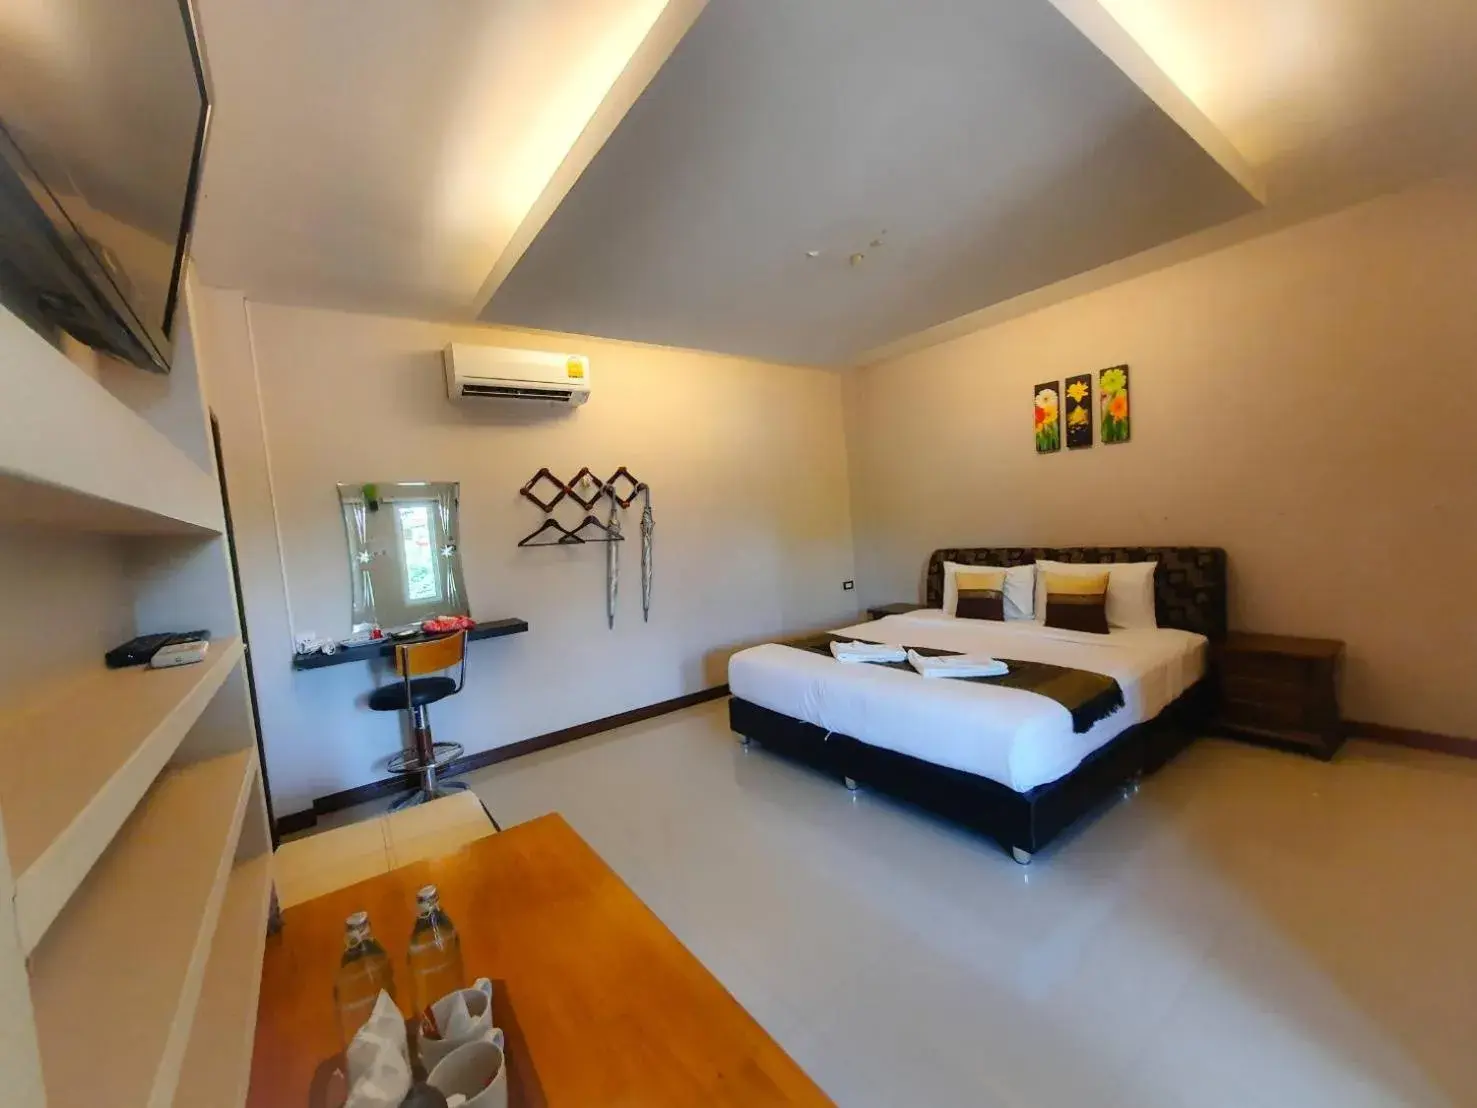 Bedroom in Dreampark resort